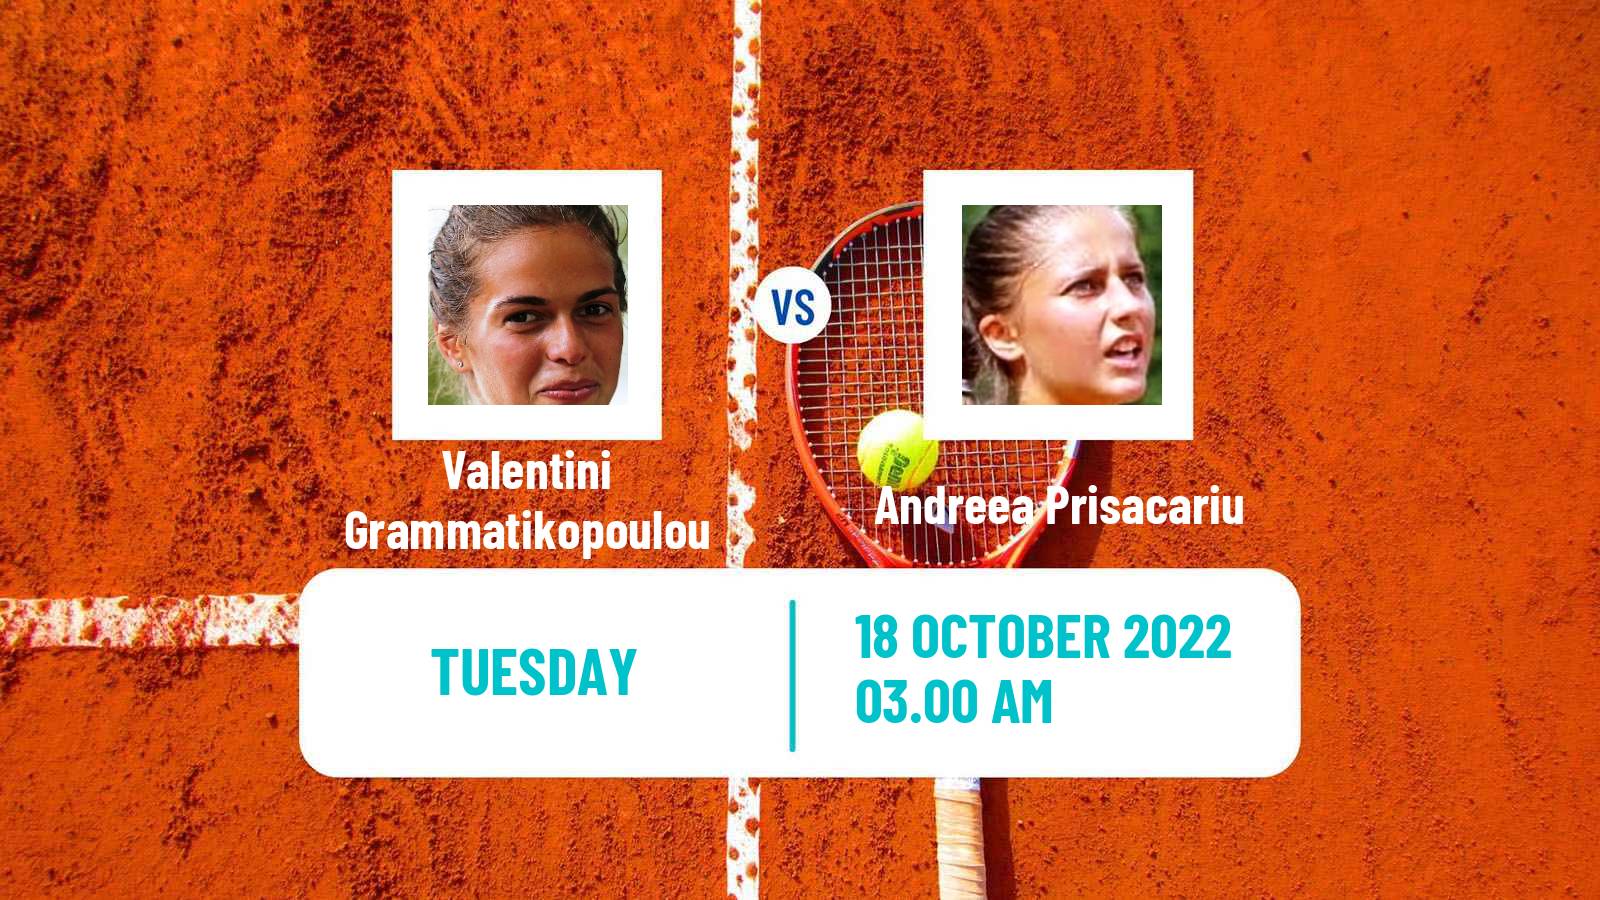 Tennis ITF Tournaments Valentini Grammatikopoulou - Andreea Prisacariu